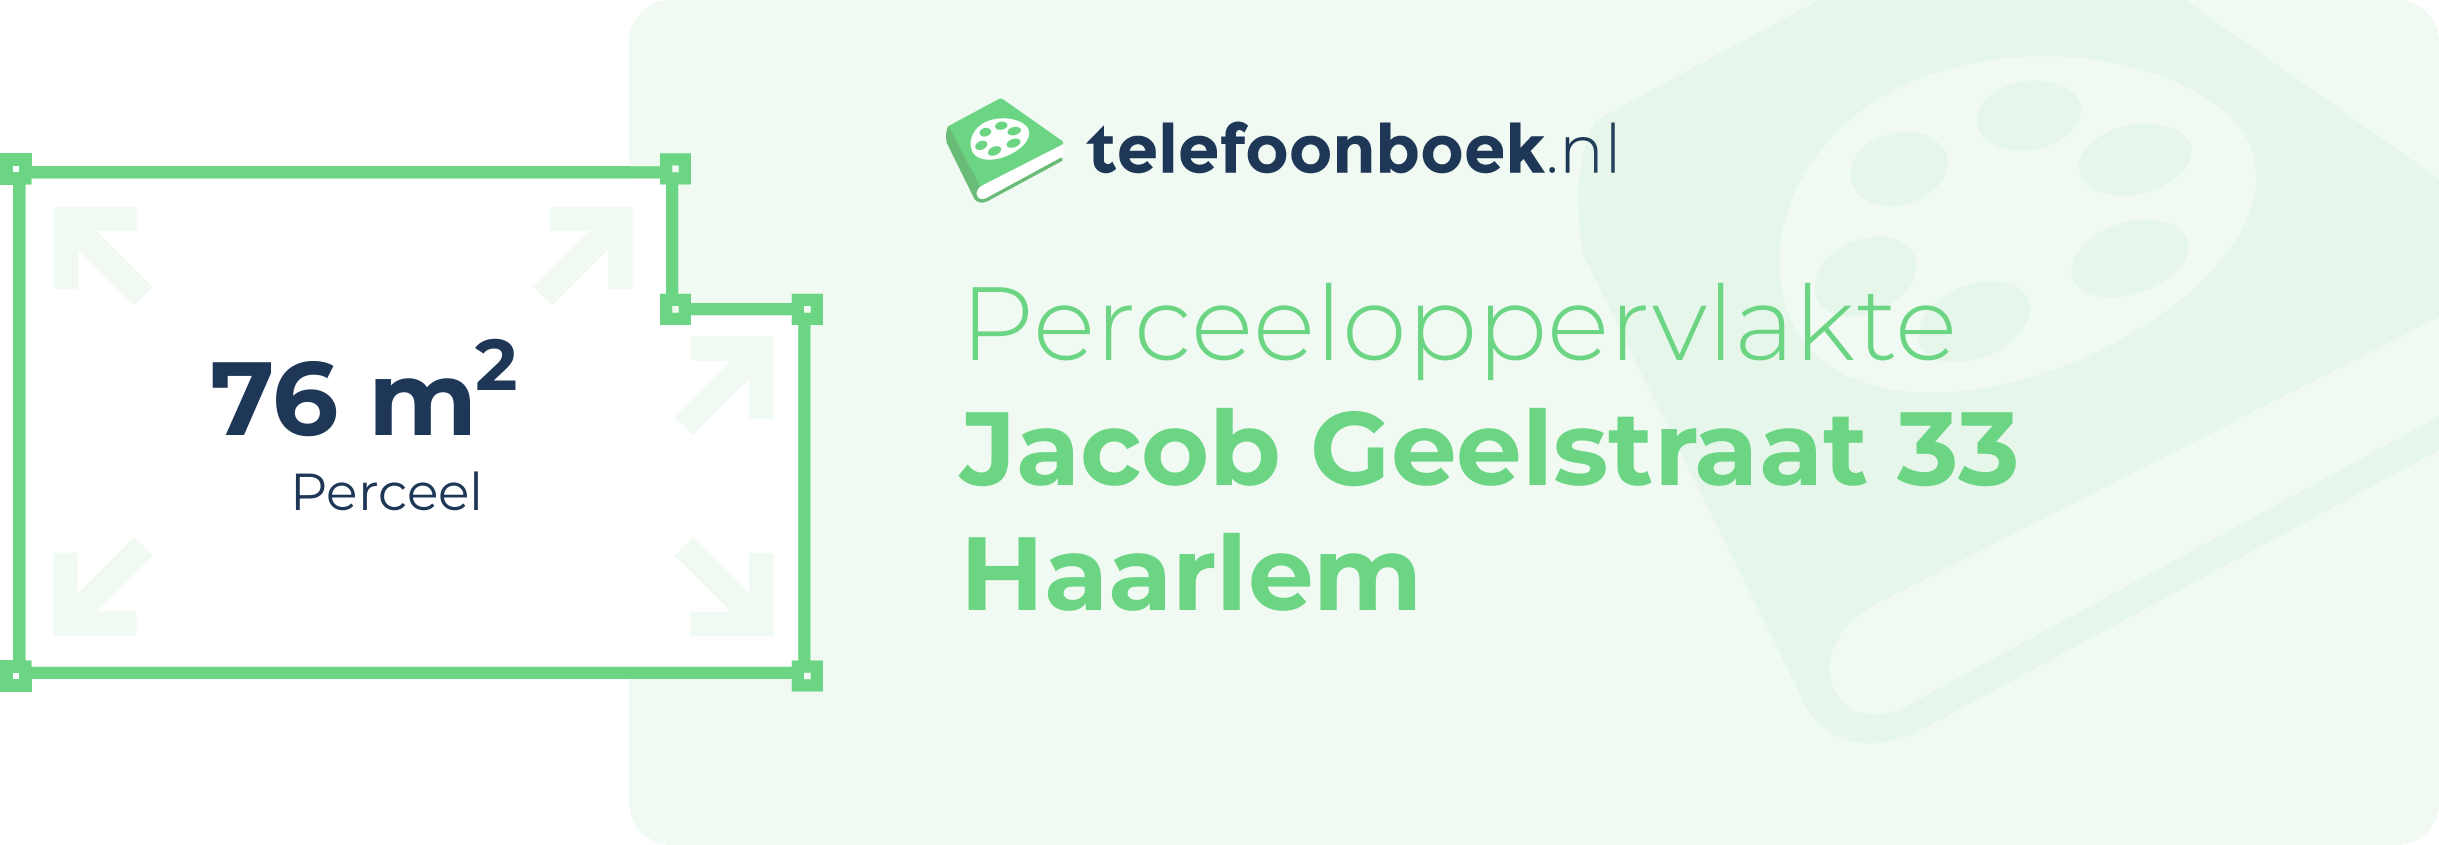 Perceeloppervlakte Jacob Geelstraat 33 Haarlem